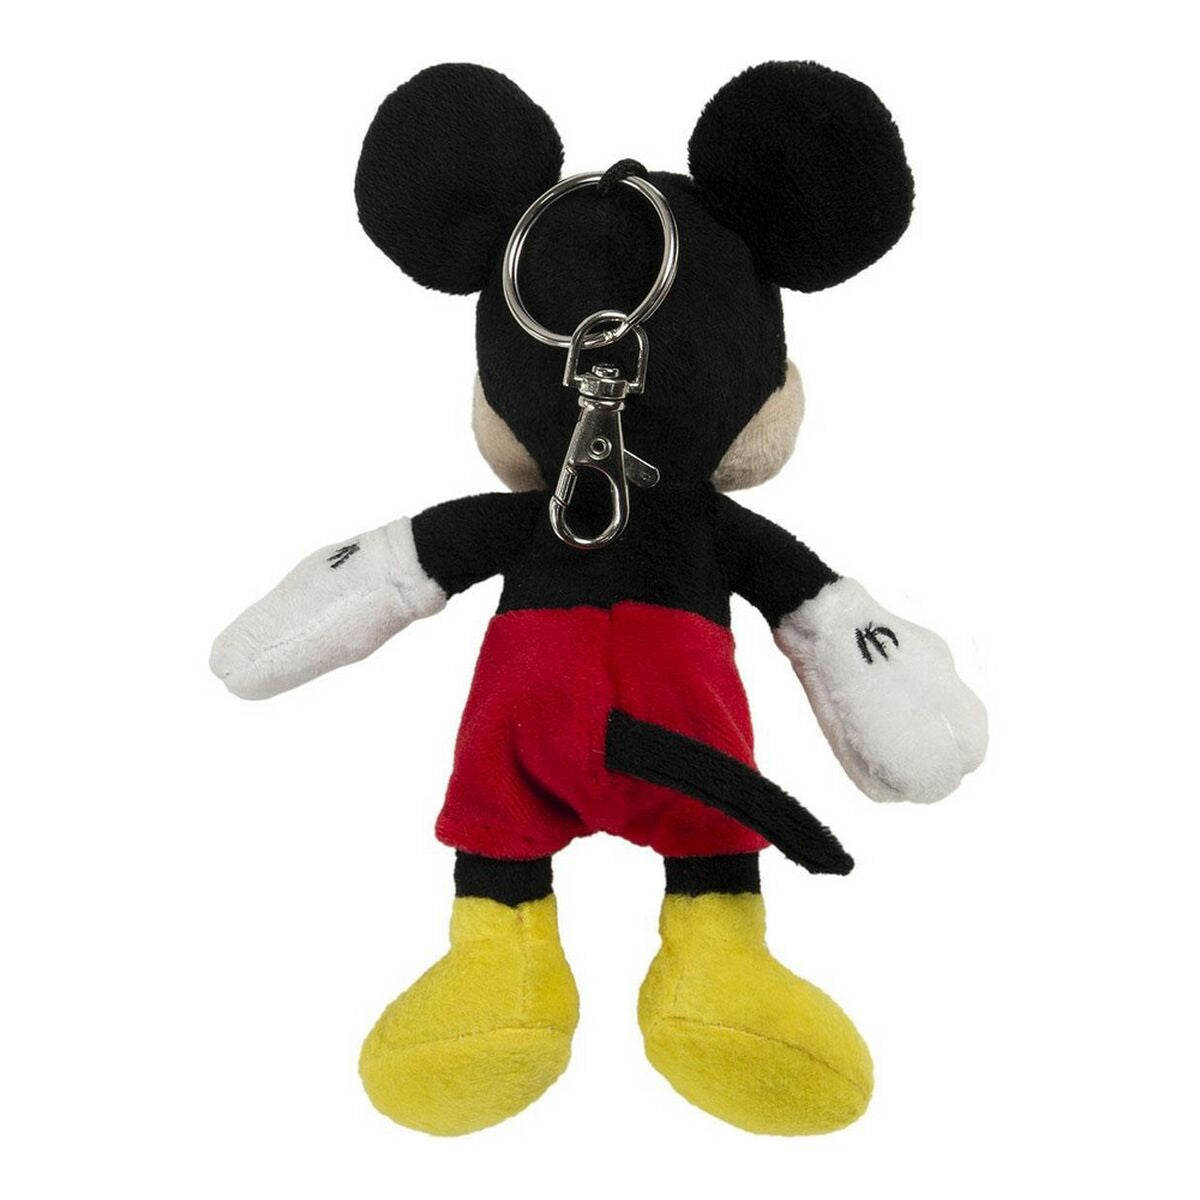 Plüschtier Schlüsselanhänger Mickey Mouse Rot